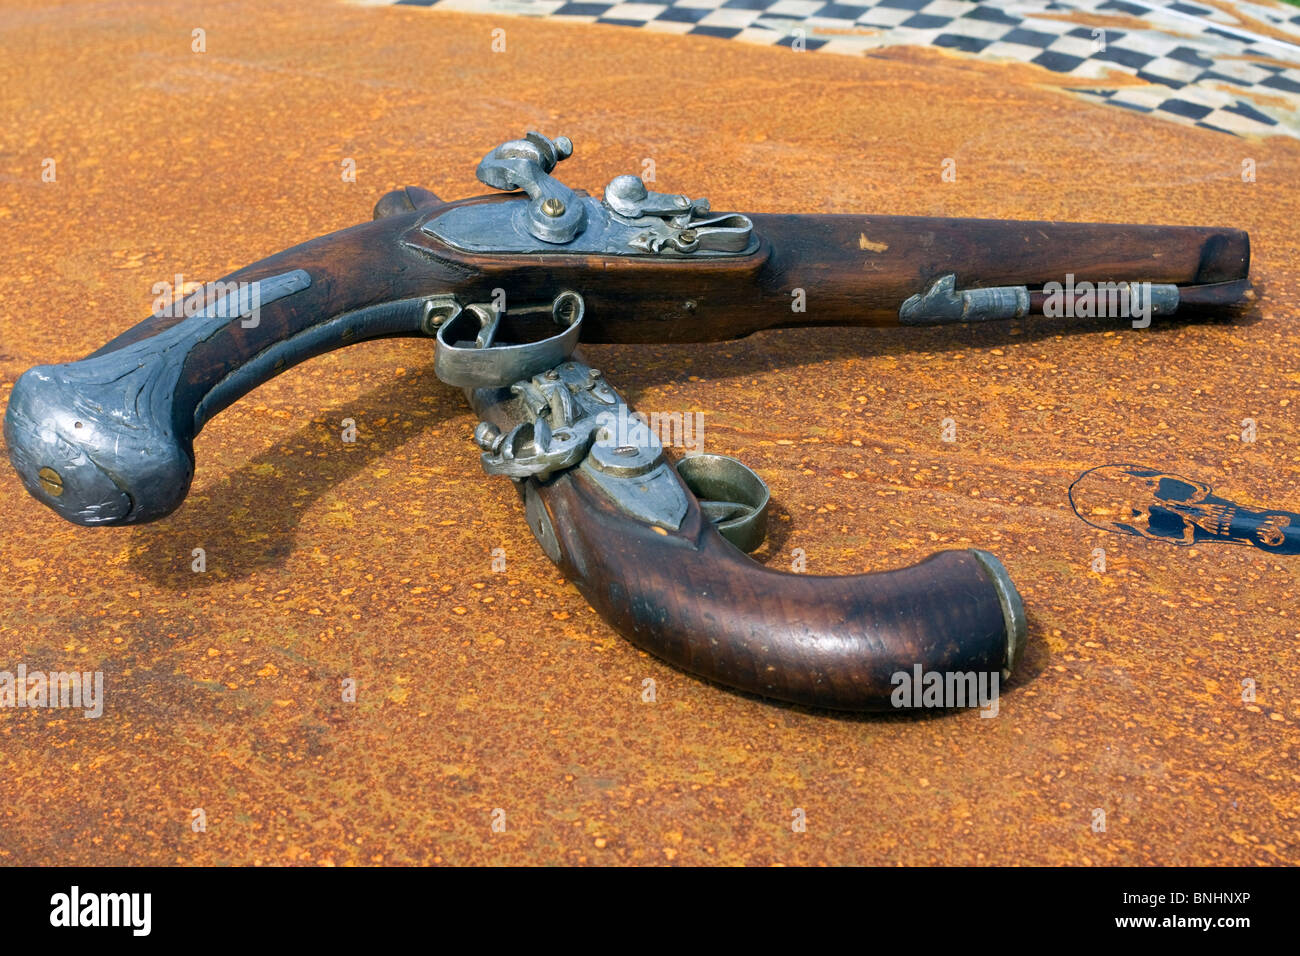 Two Flint lock Pistols on a rat car at Santa Pod UK Stock Photo